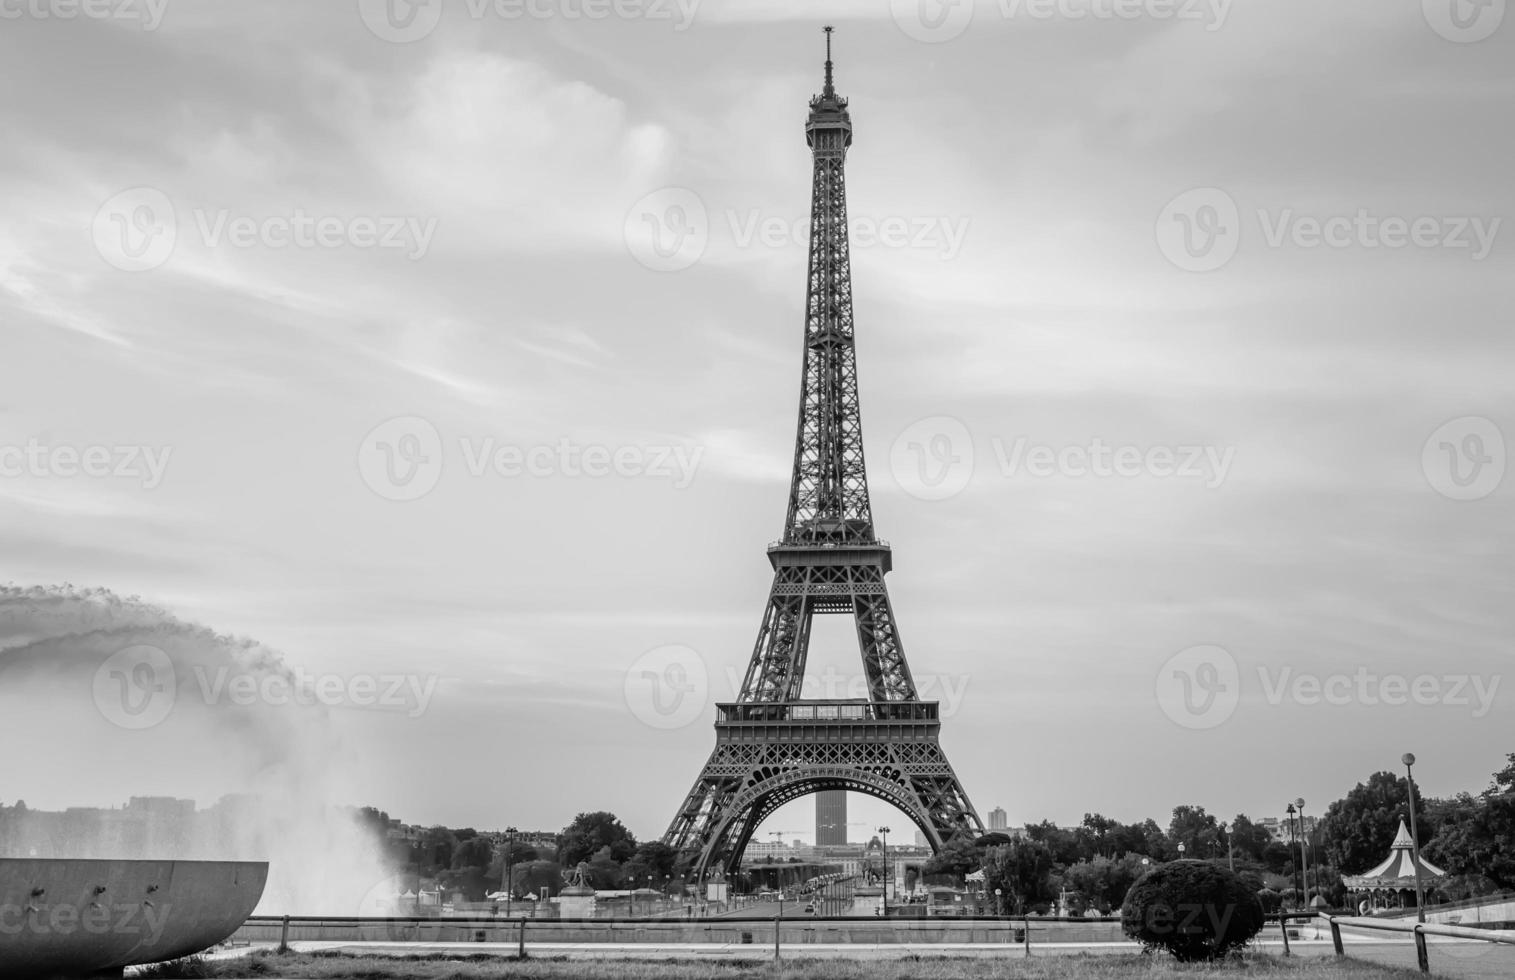 Eiffel tower 838516 Stock Photo at Vecteezy